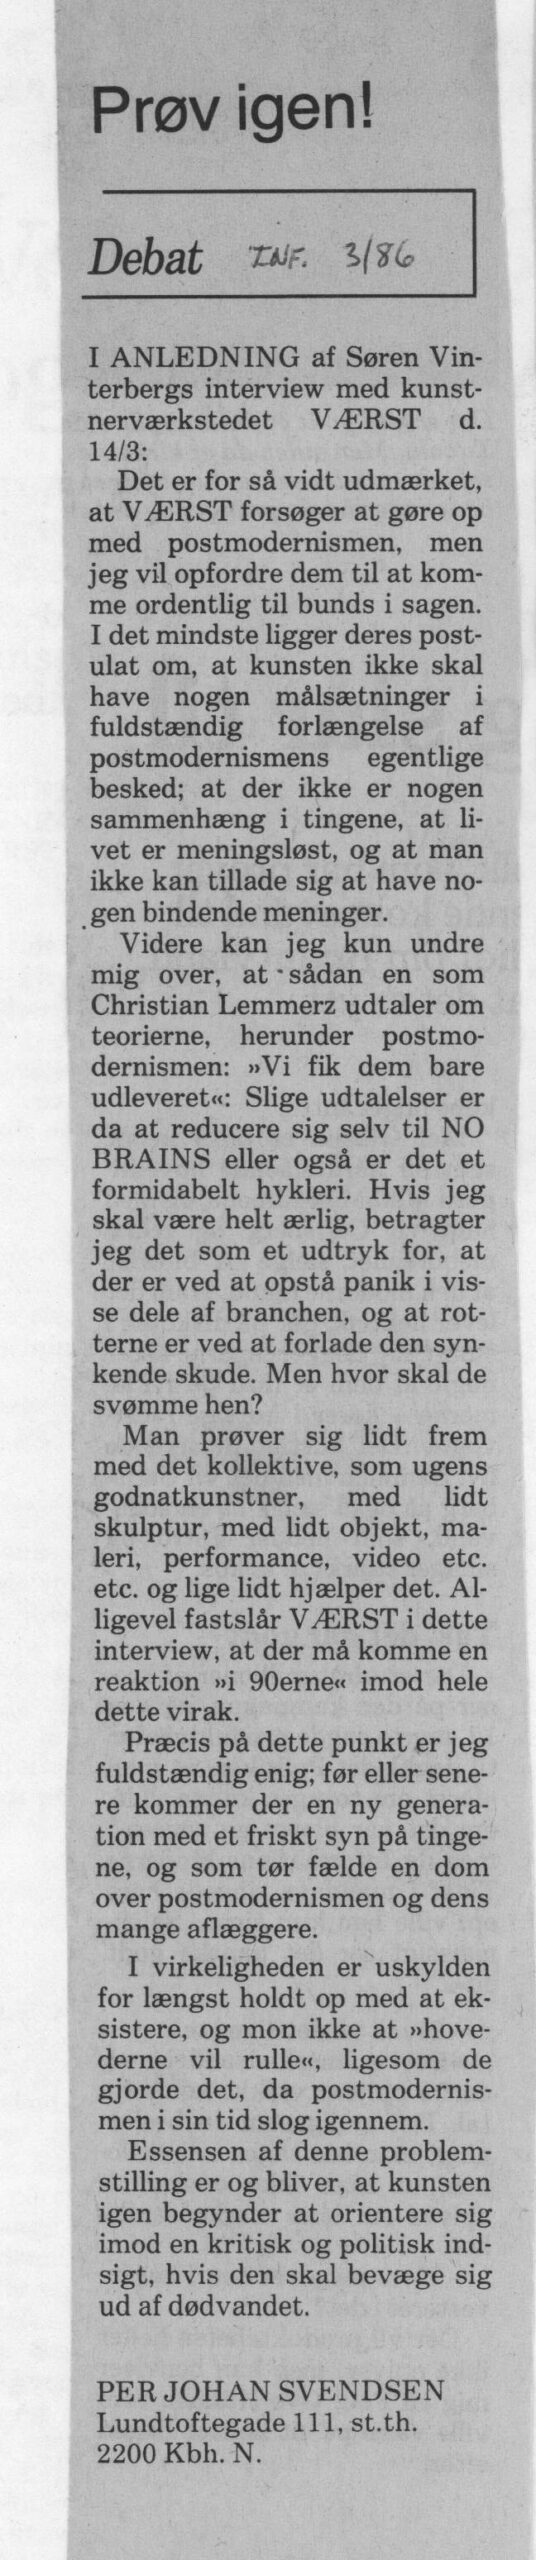 Prøv igen. Debatindlæg. Per Johan Svendsen. Information Medio marts 1986.